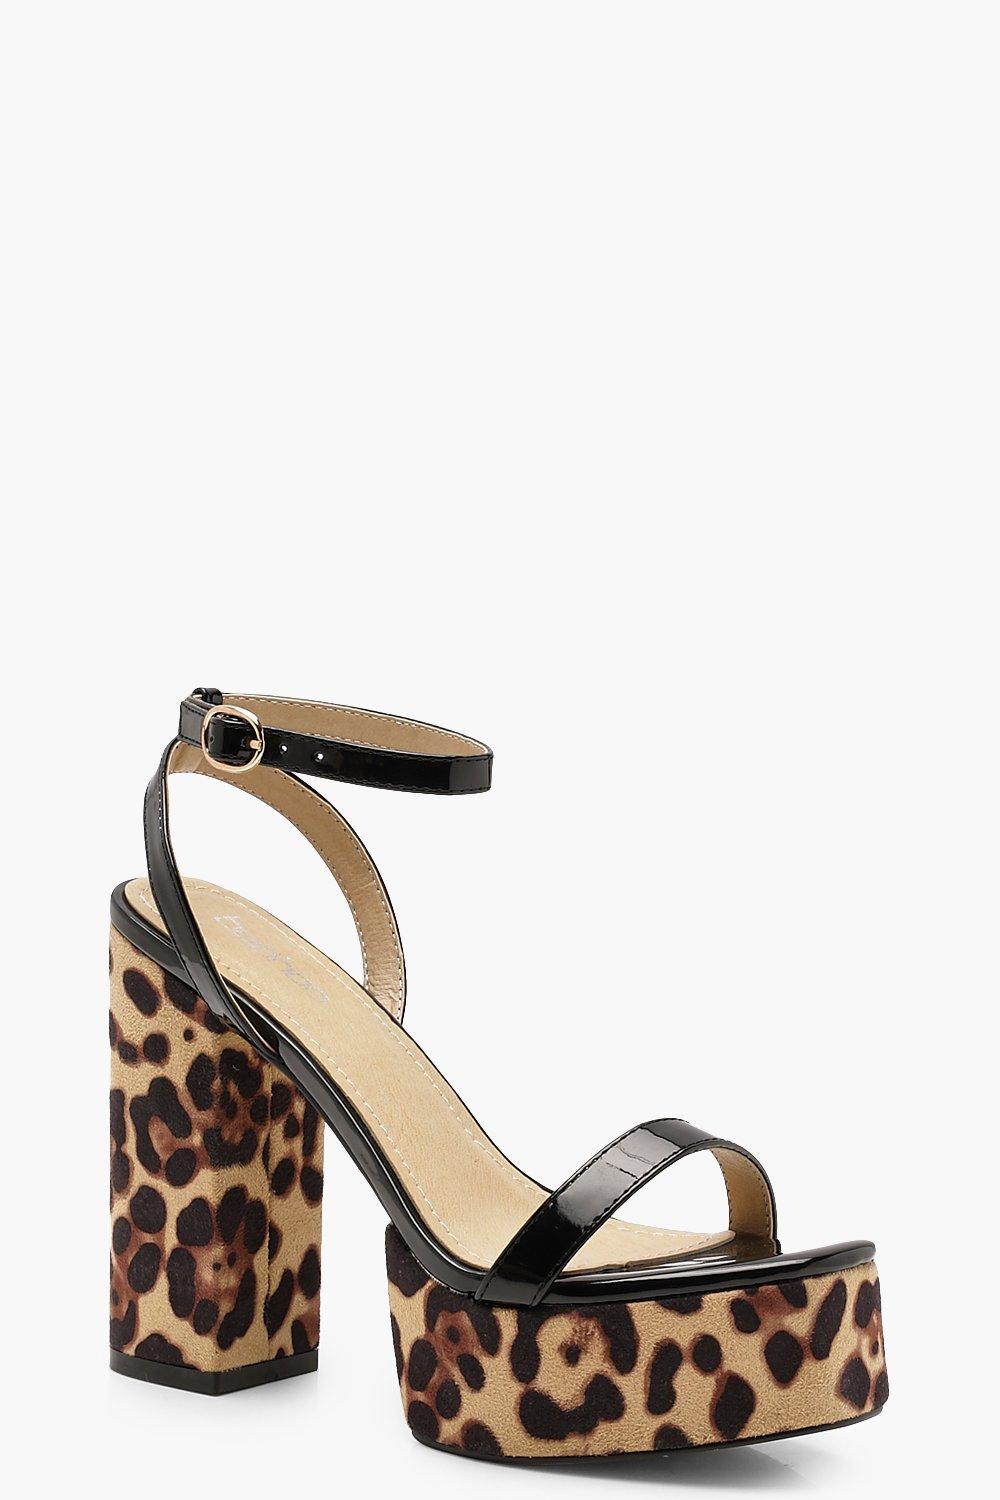 boohoo leopard print shoes